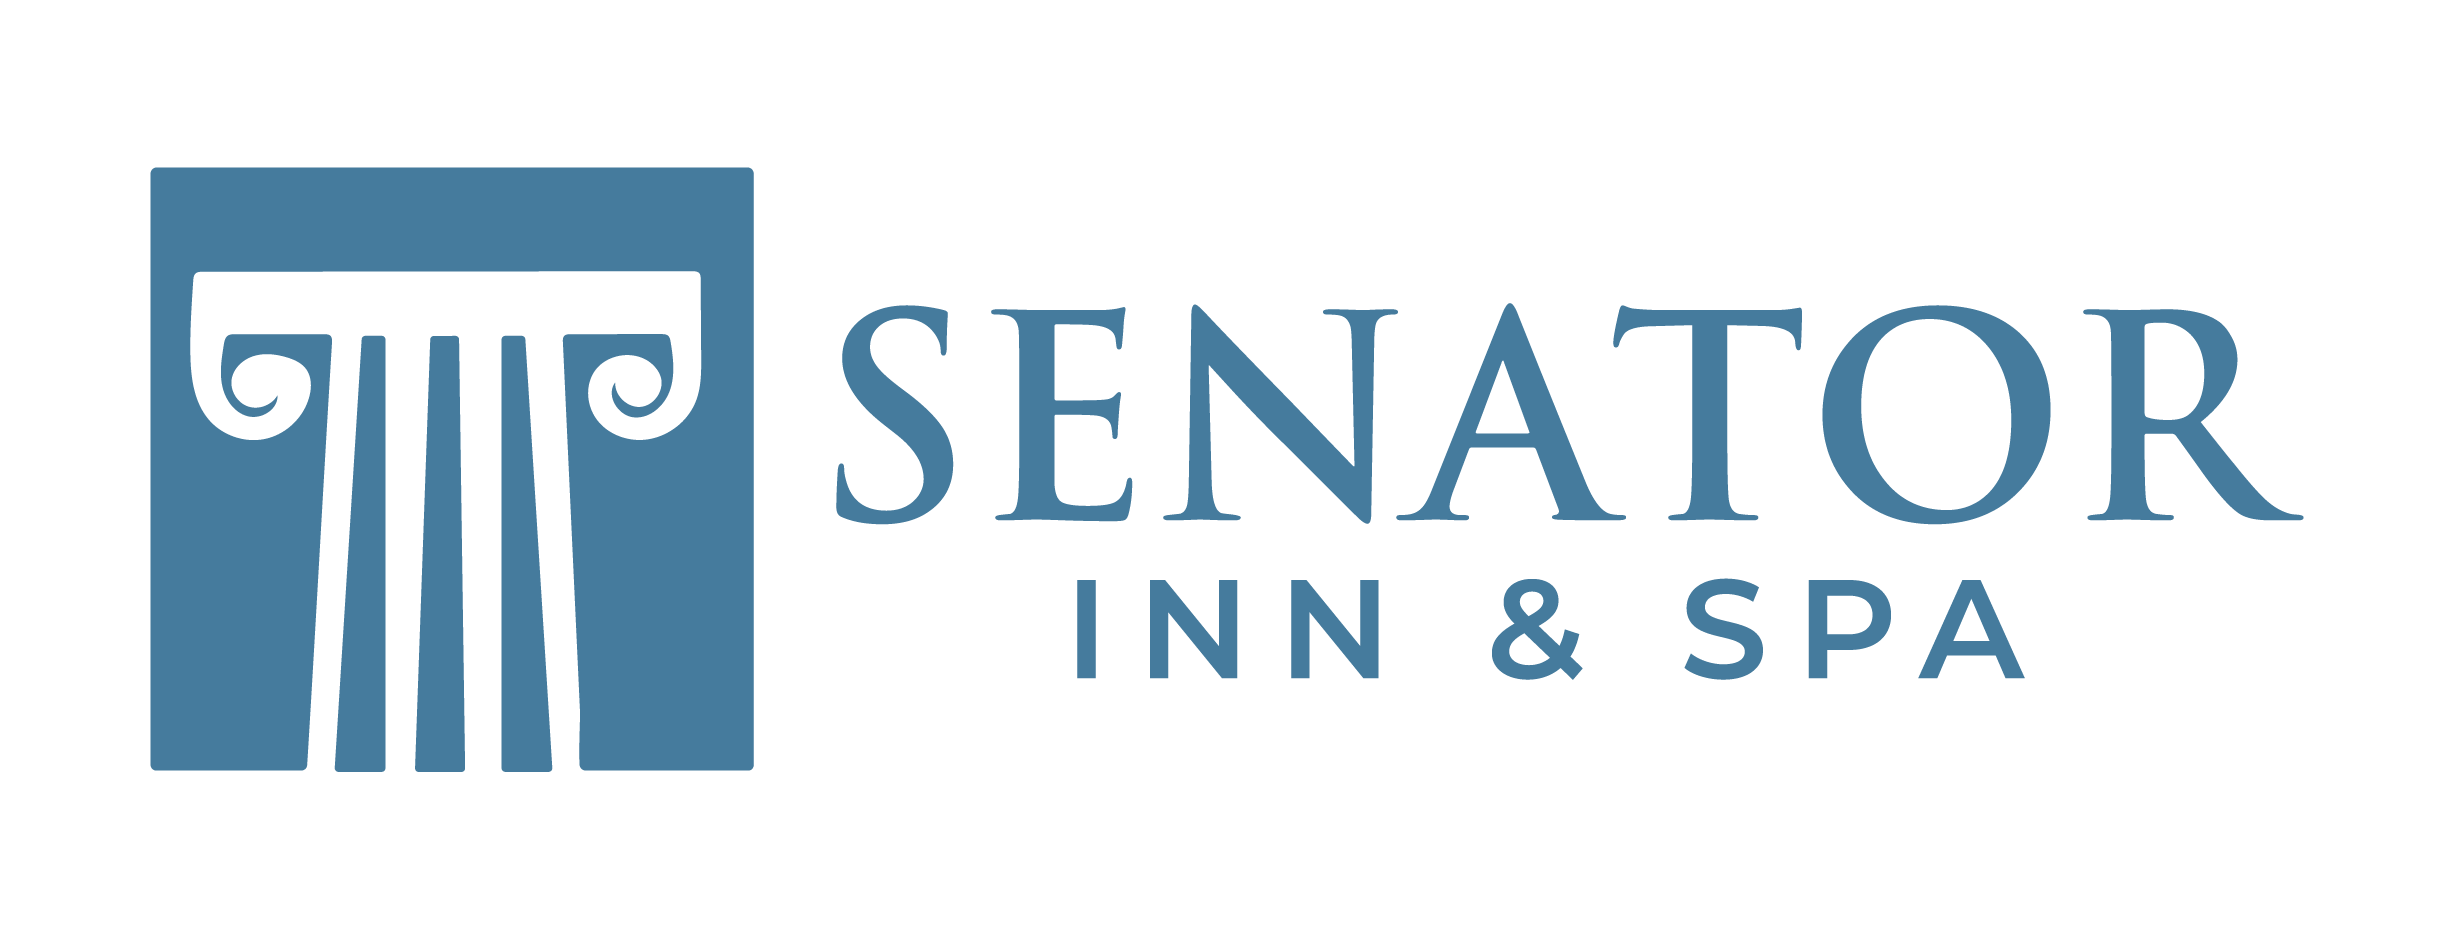 Senator Inn